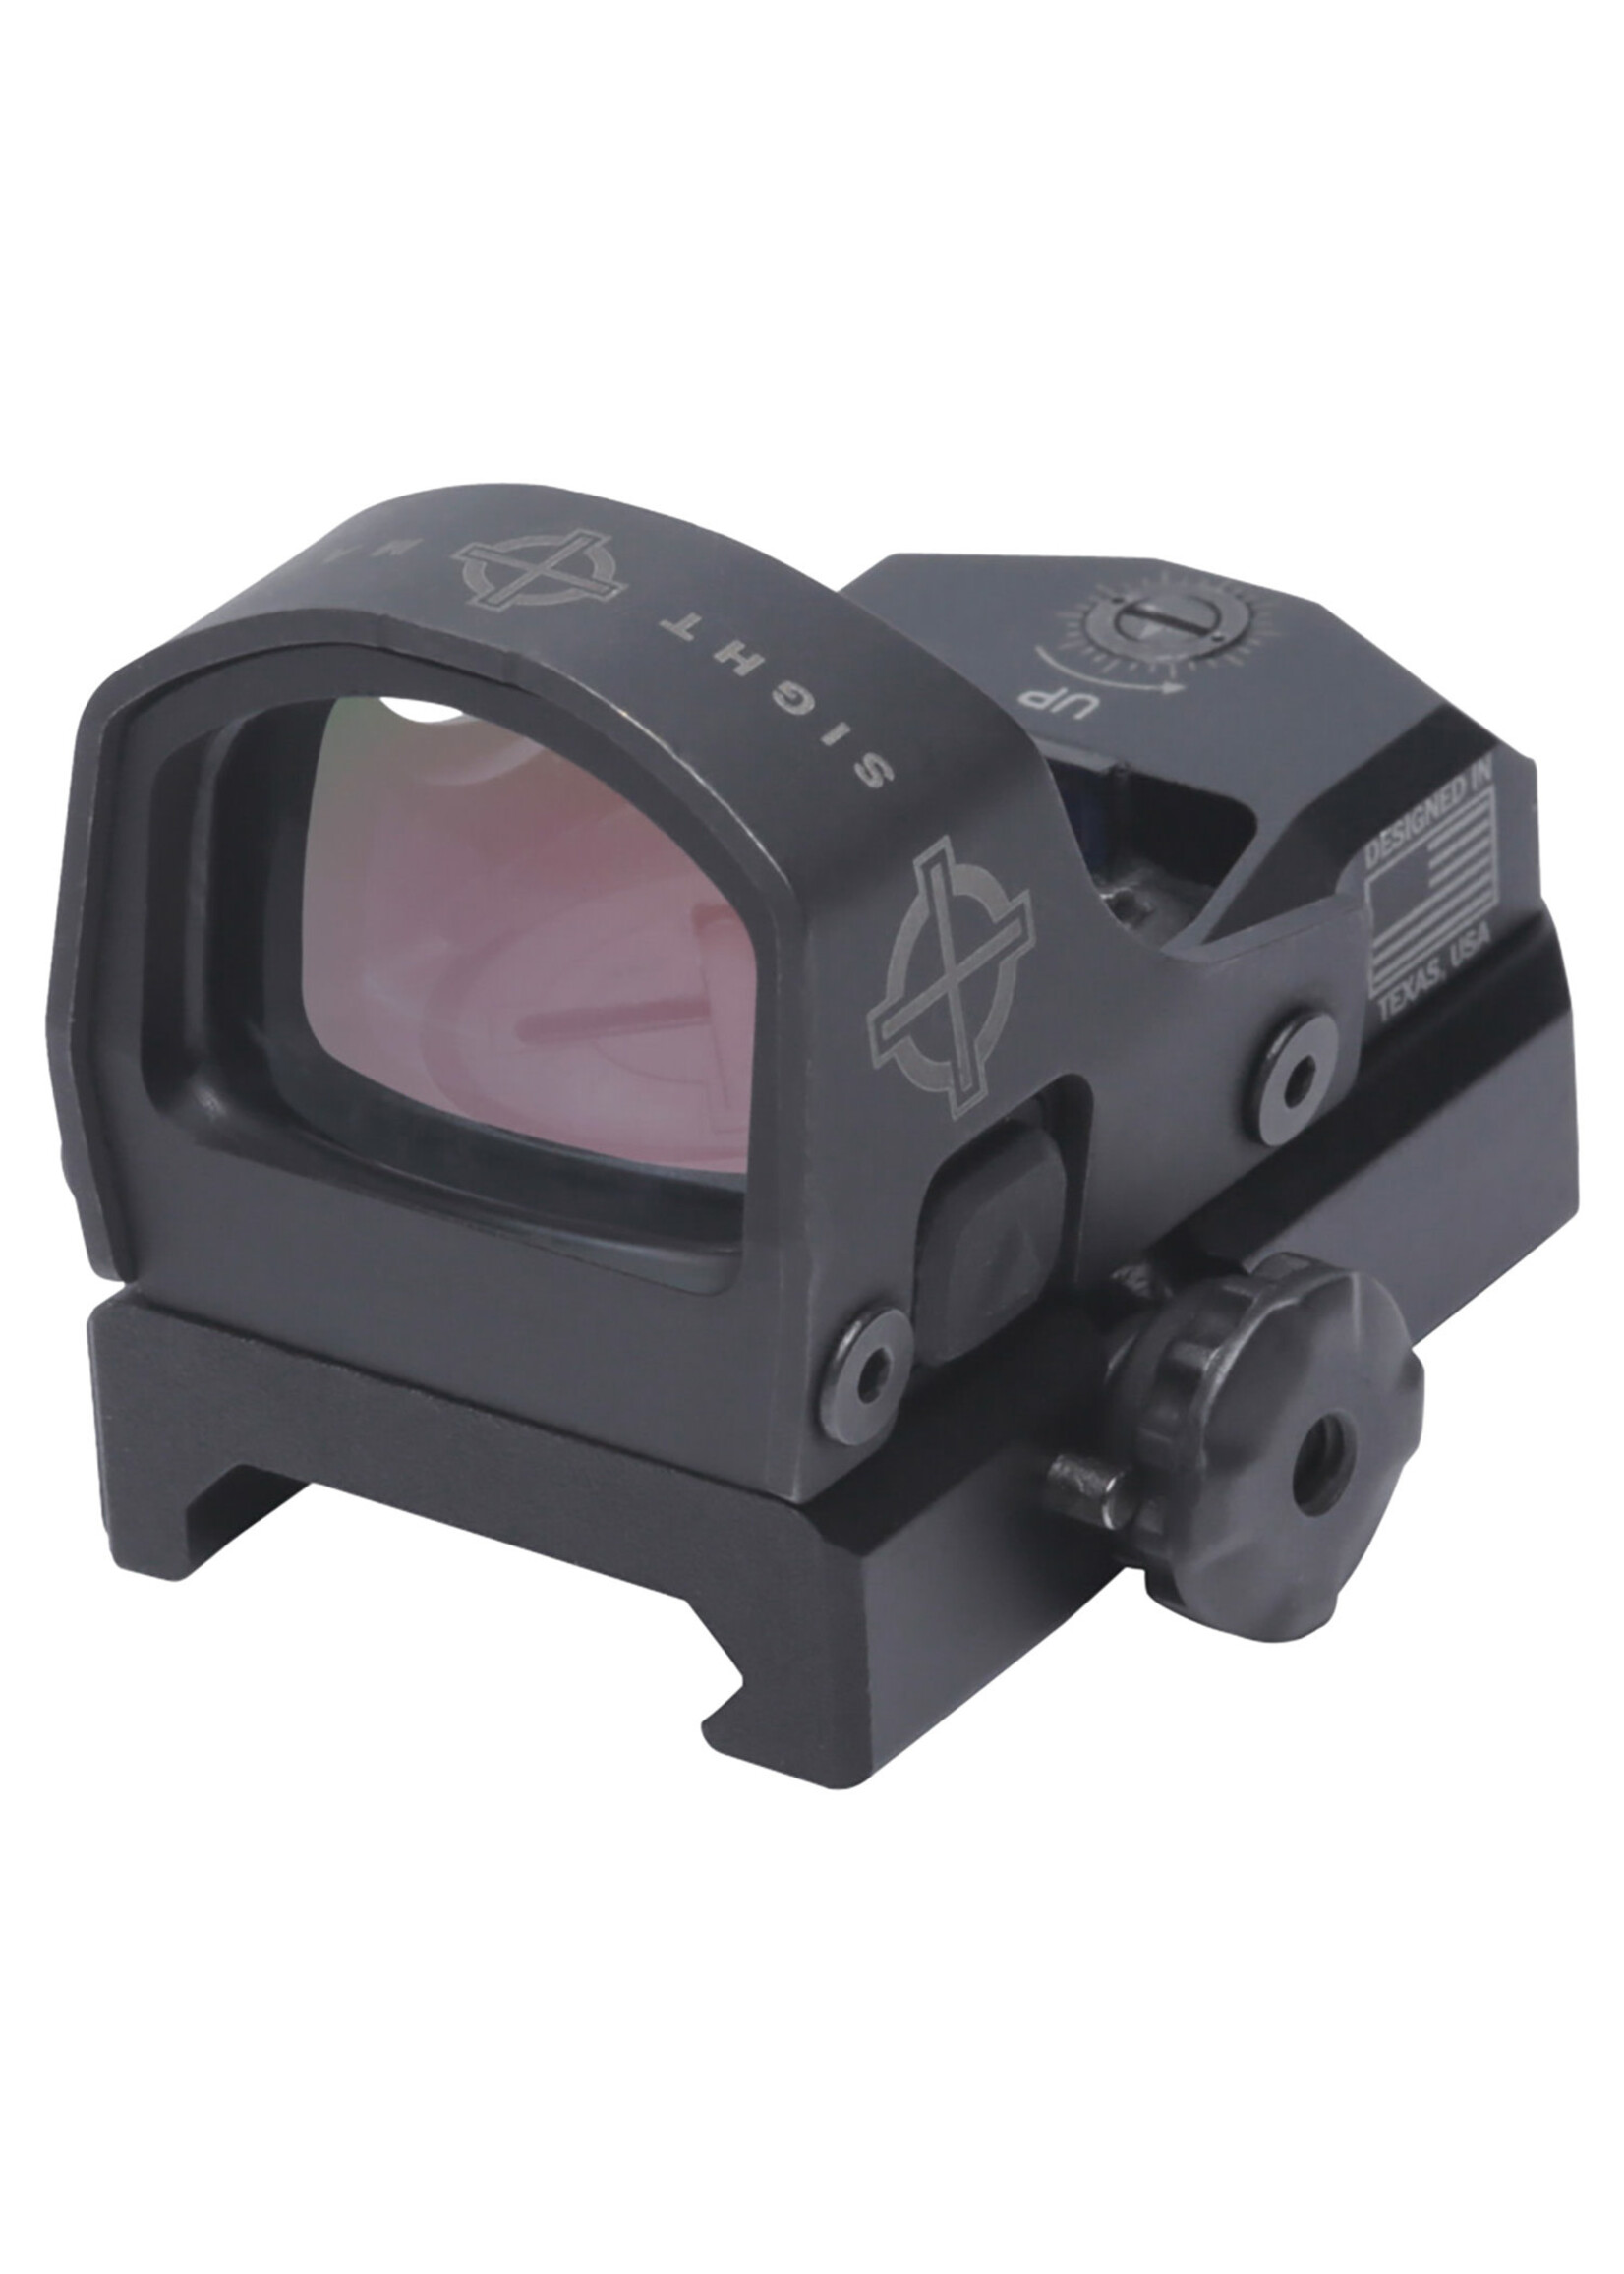 Sightmark Sightmark Mini Shot M-Spec LQD Matte Black 1x21x15mm 3 MOA Illuminated Red Dot Reticle